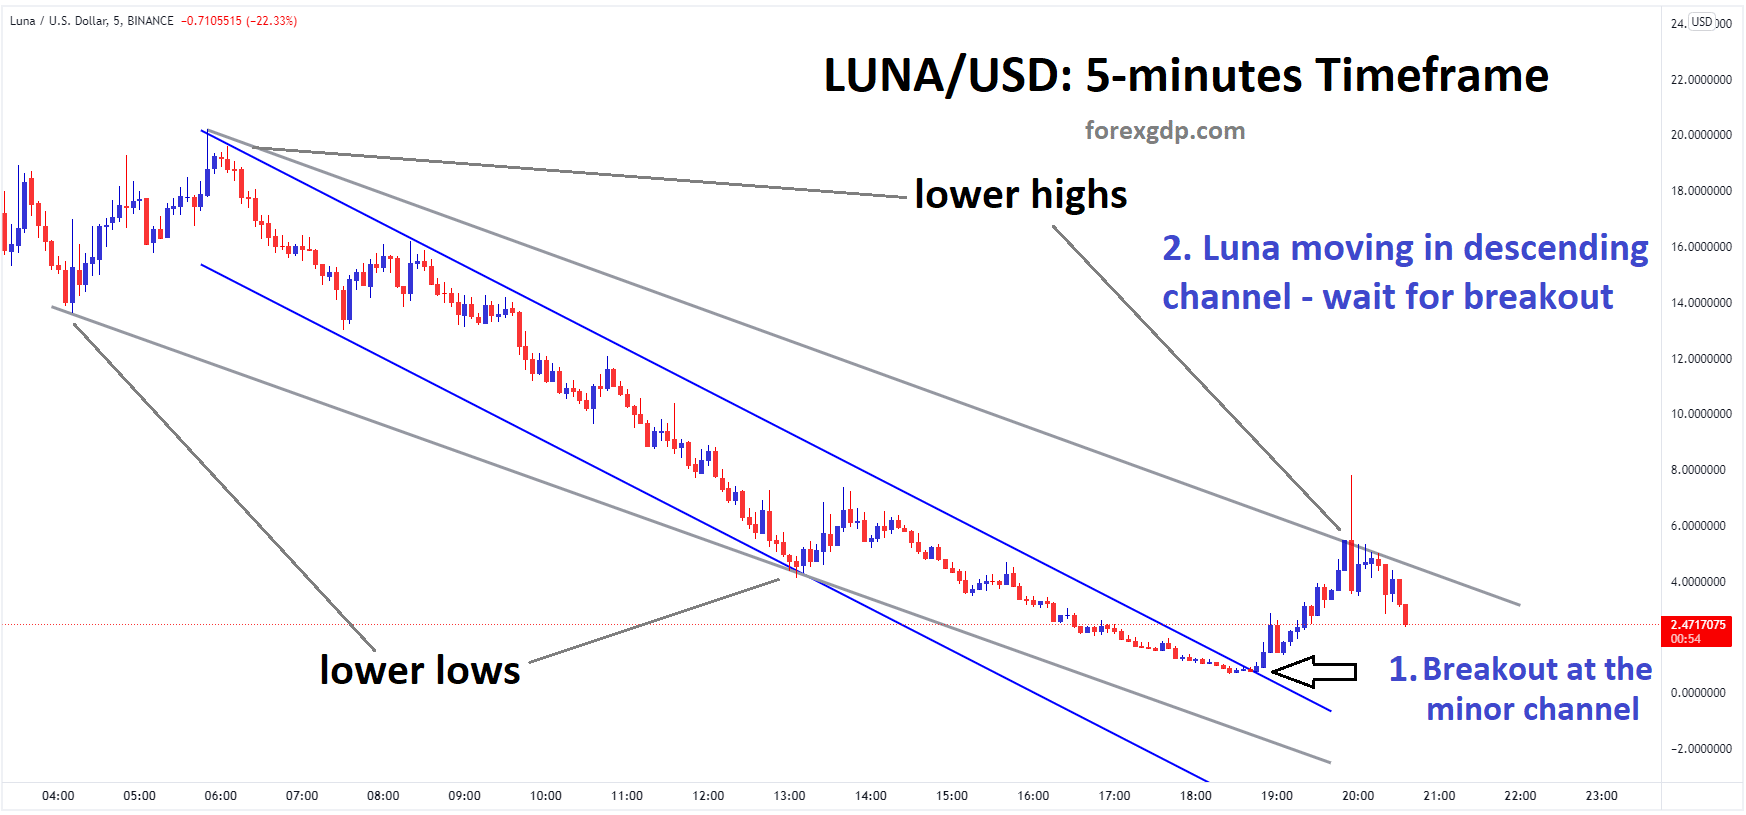 LUNAUSD technical price analysis